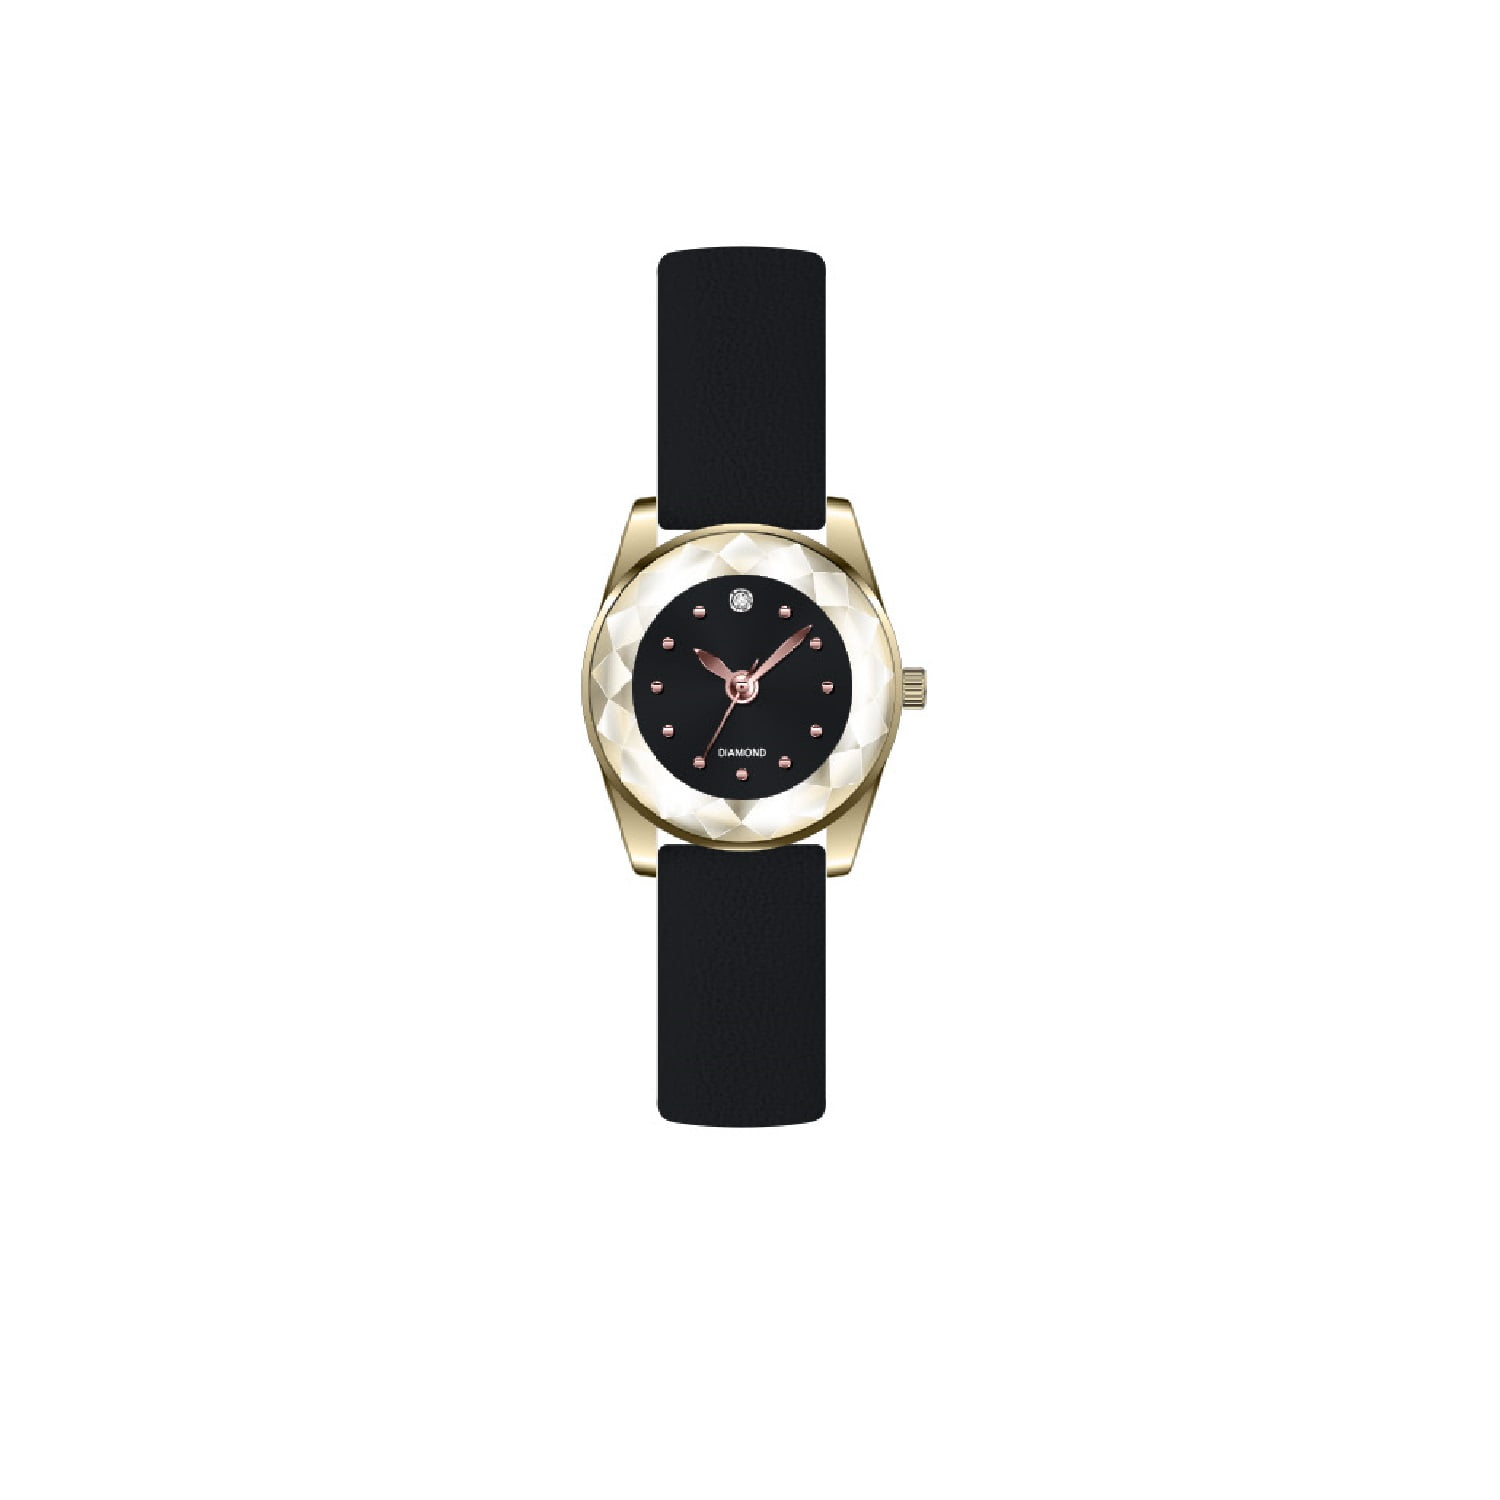 Time & Tru Women's Black/Gold Tone Analog Watch With PU Leather Strap